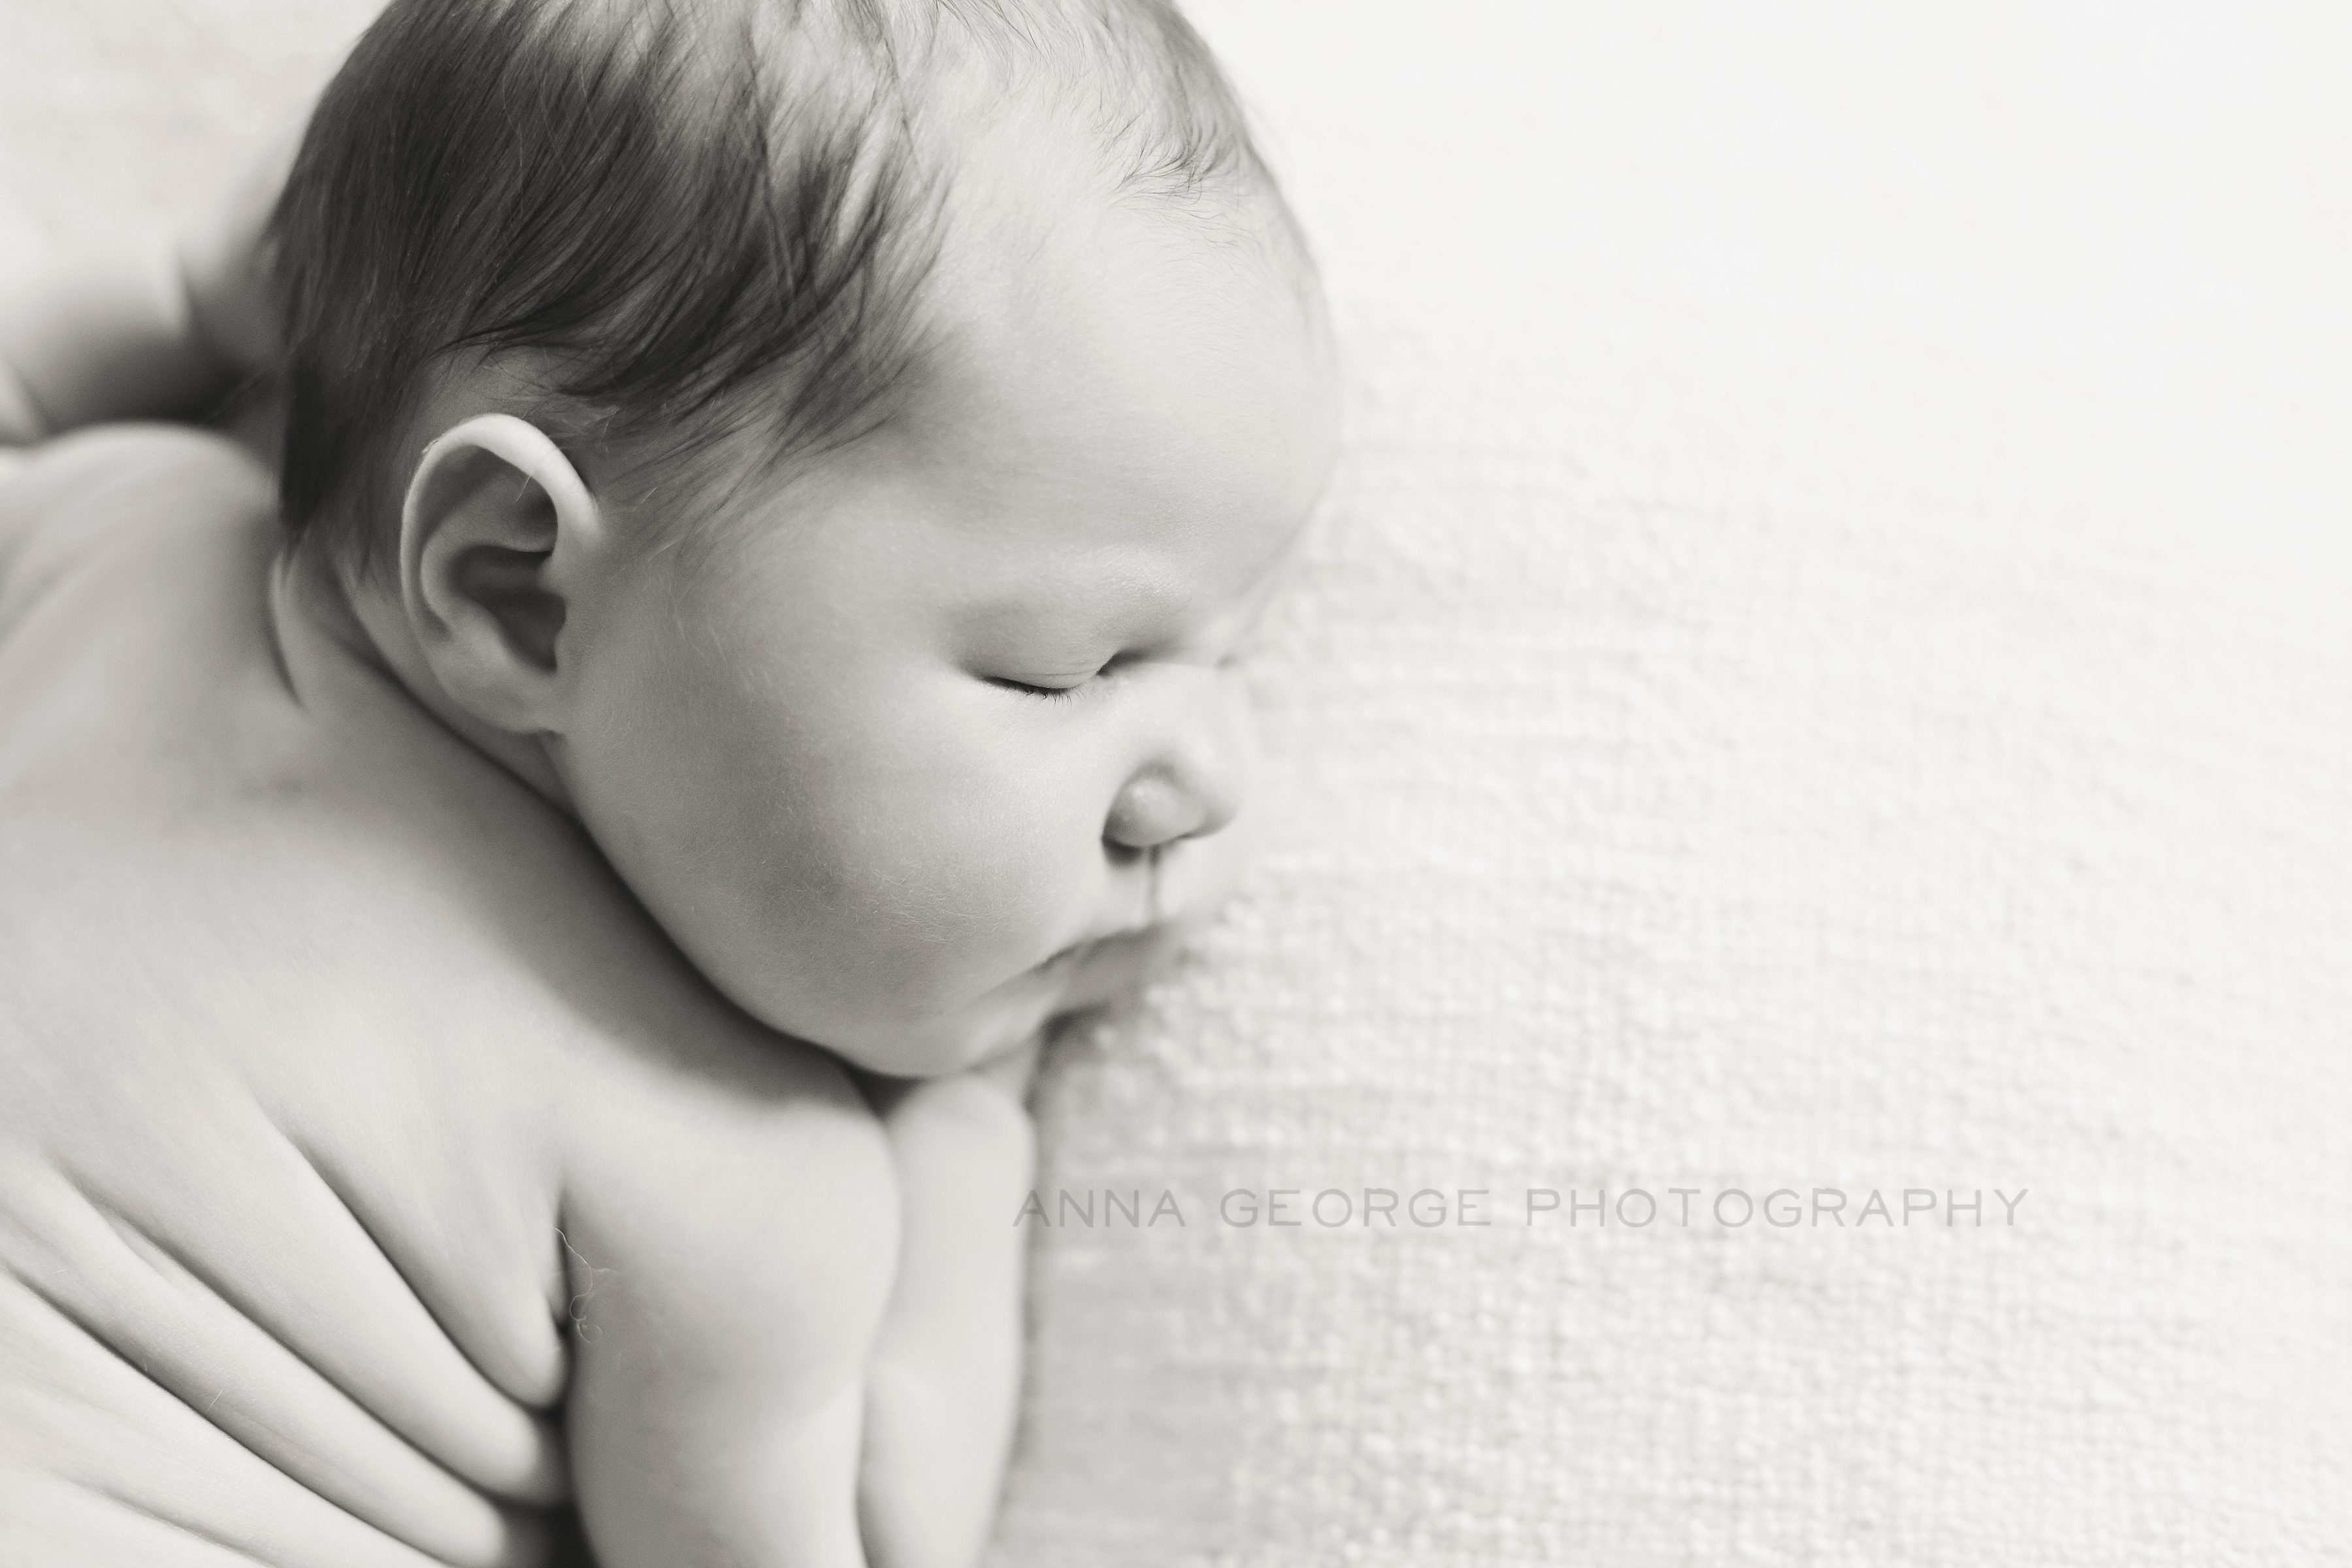 Anna George Photography - Madison WI Newborn Photographer - www.annageorgephoto.com